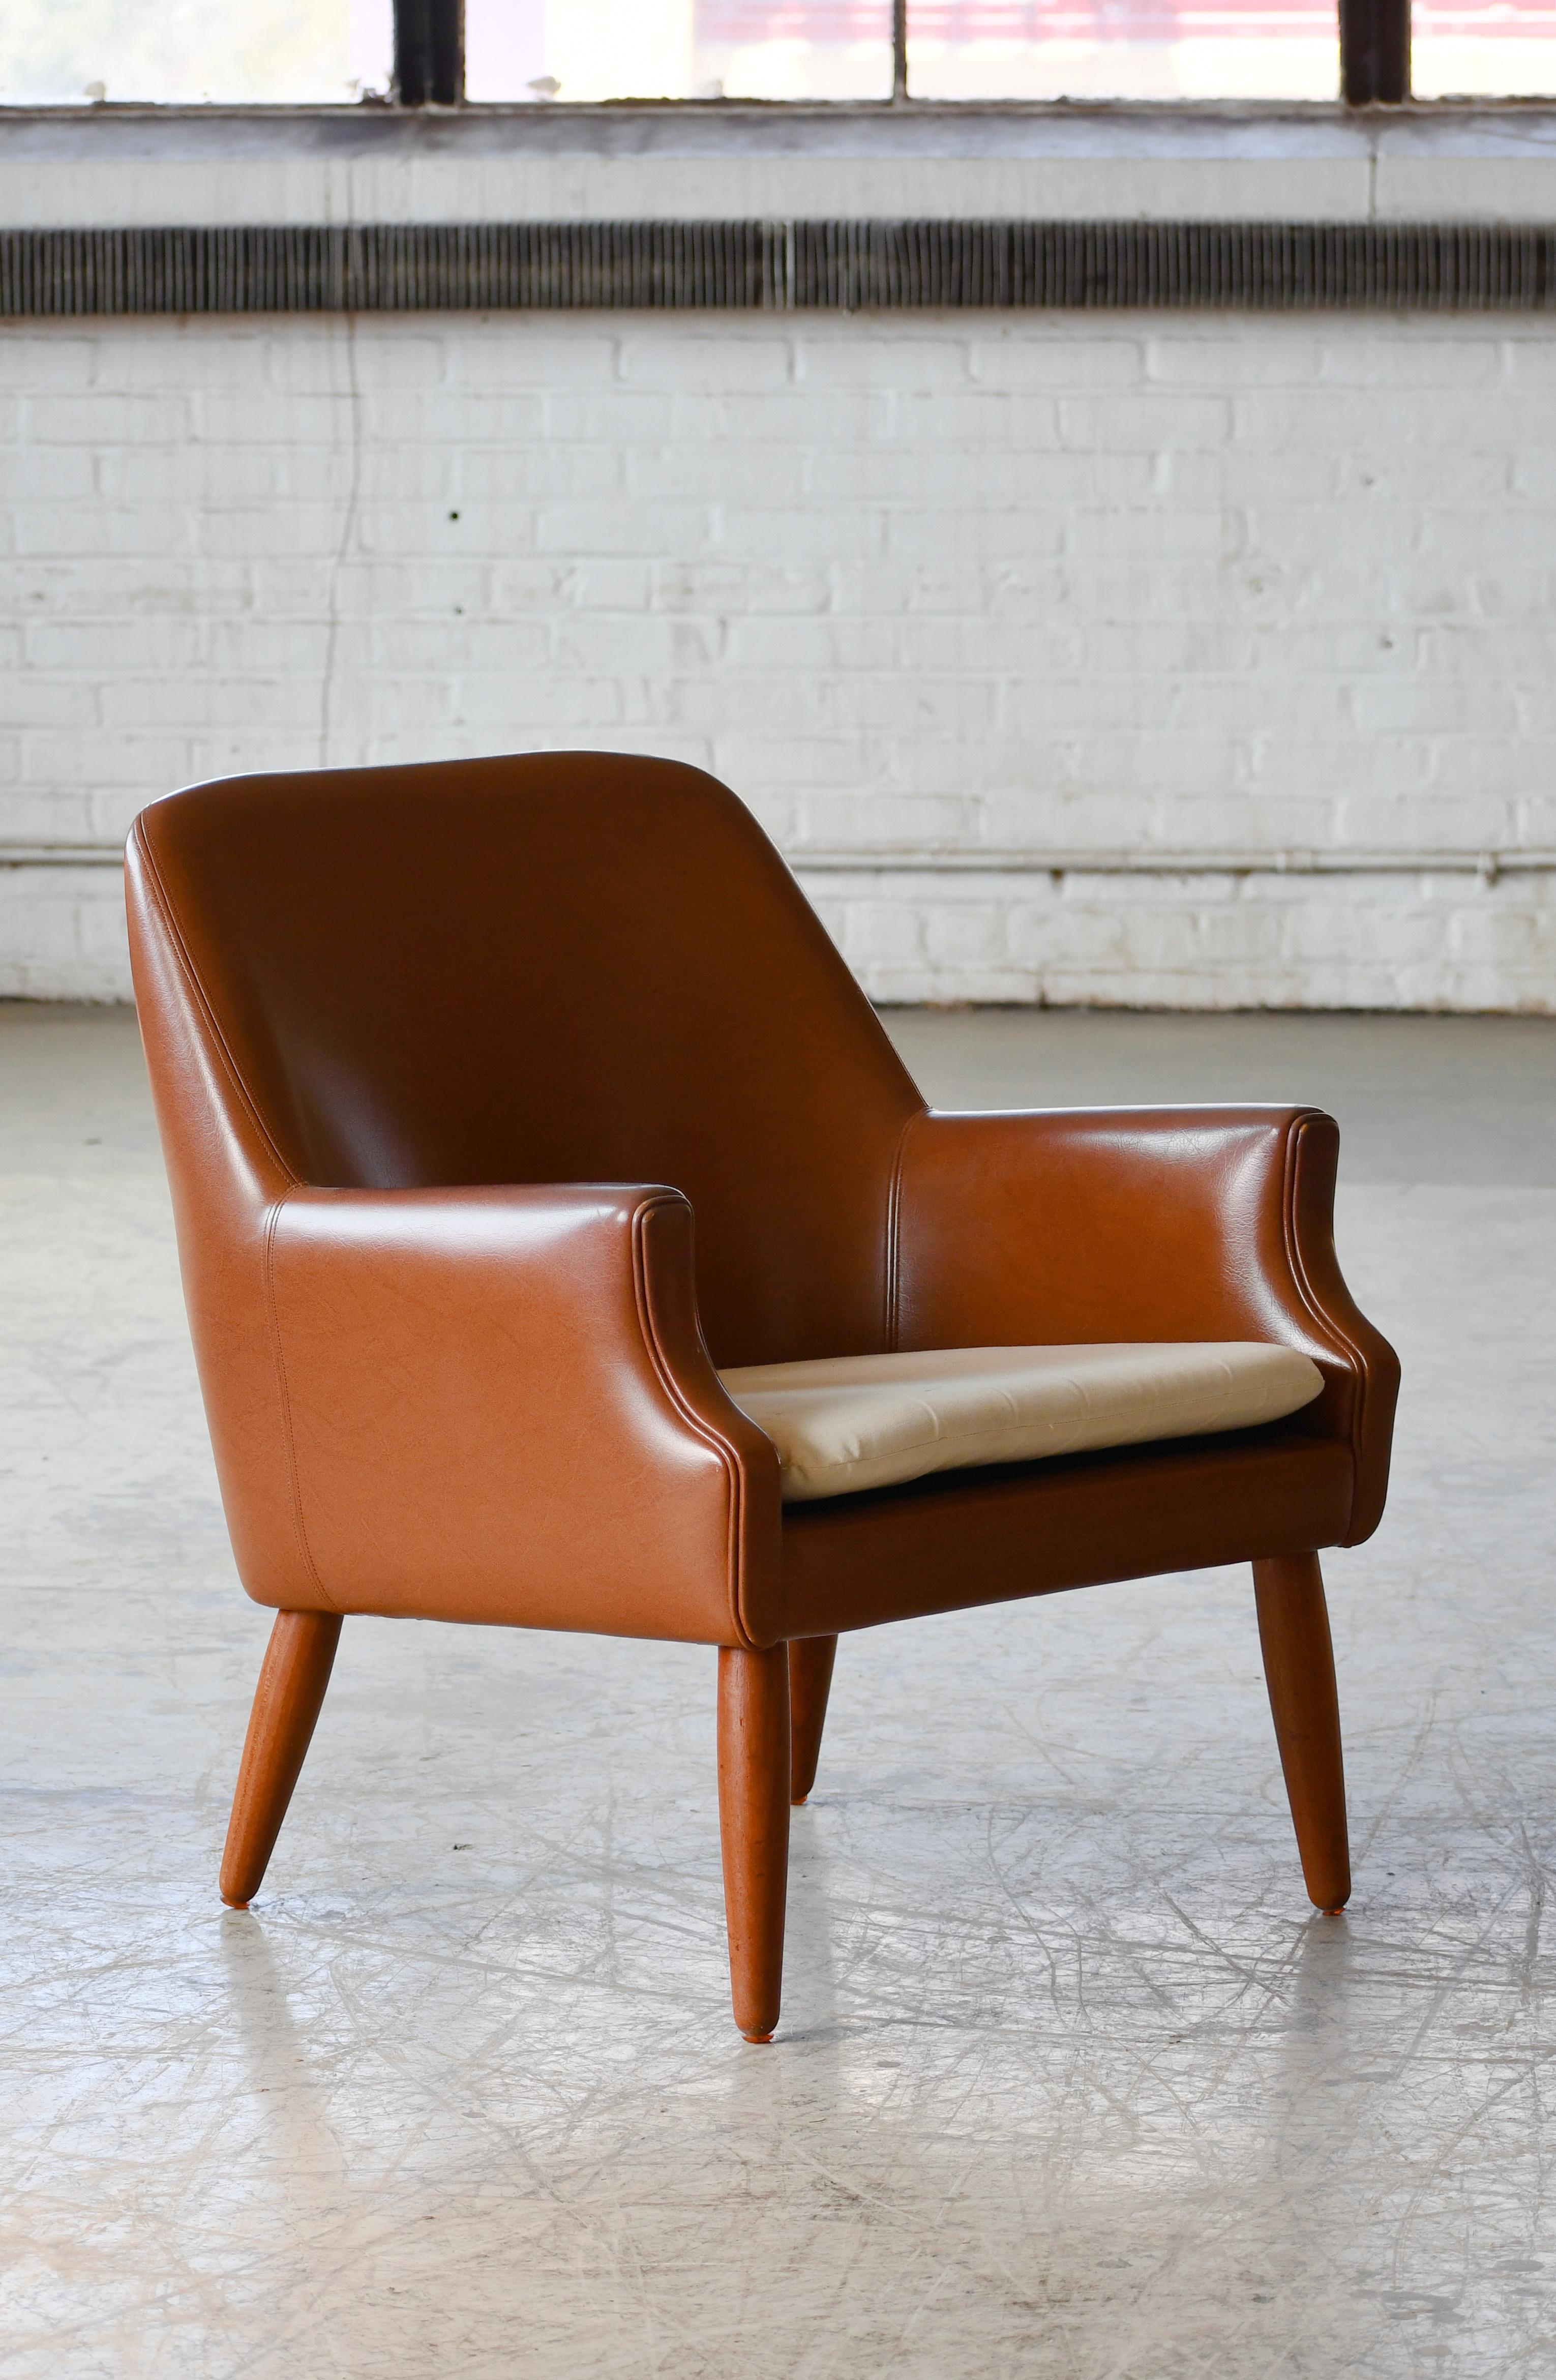 Scandinavian Modern Danish Midcentury Space Age Lounge Chair in Teak and Naugahyde For Sale